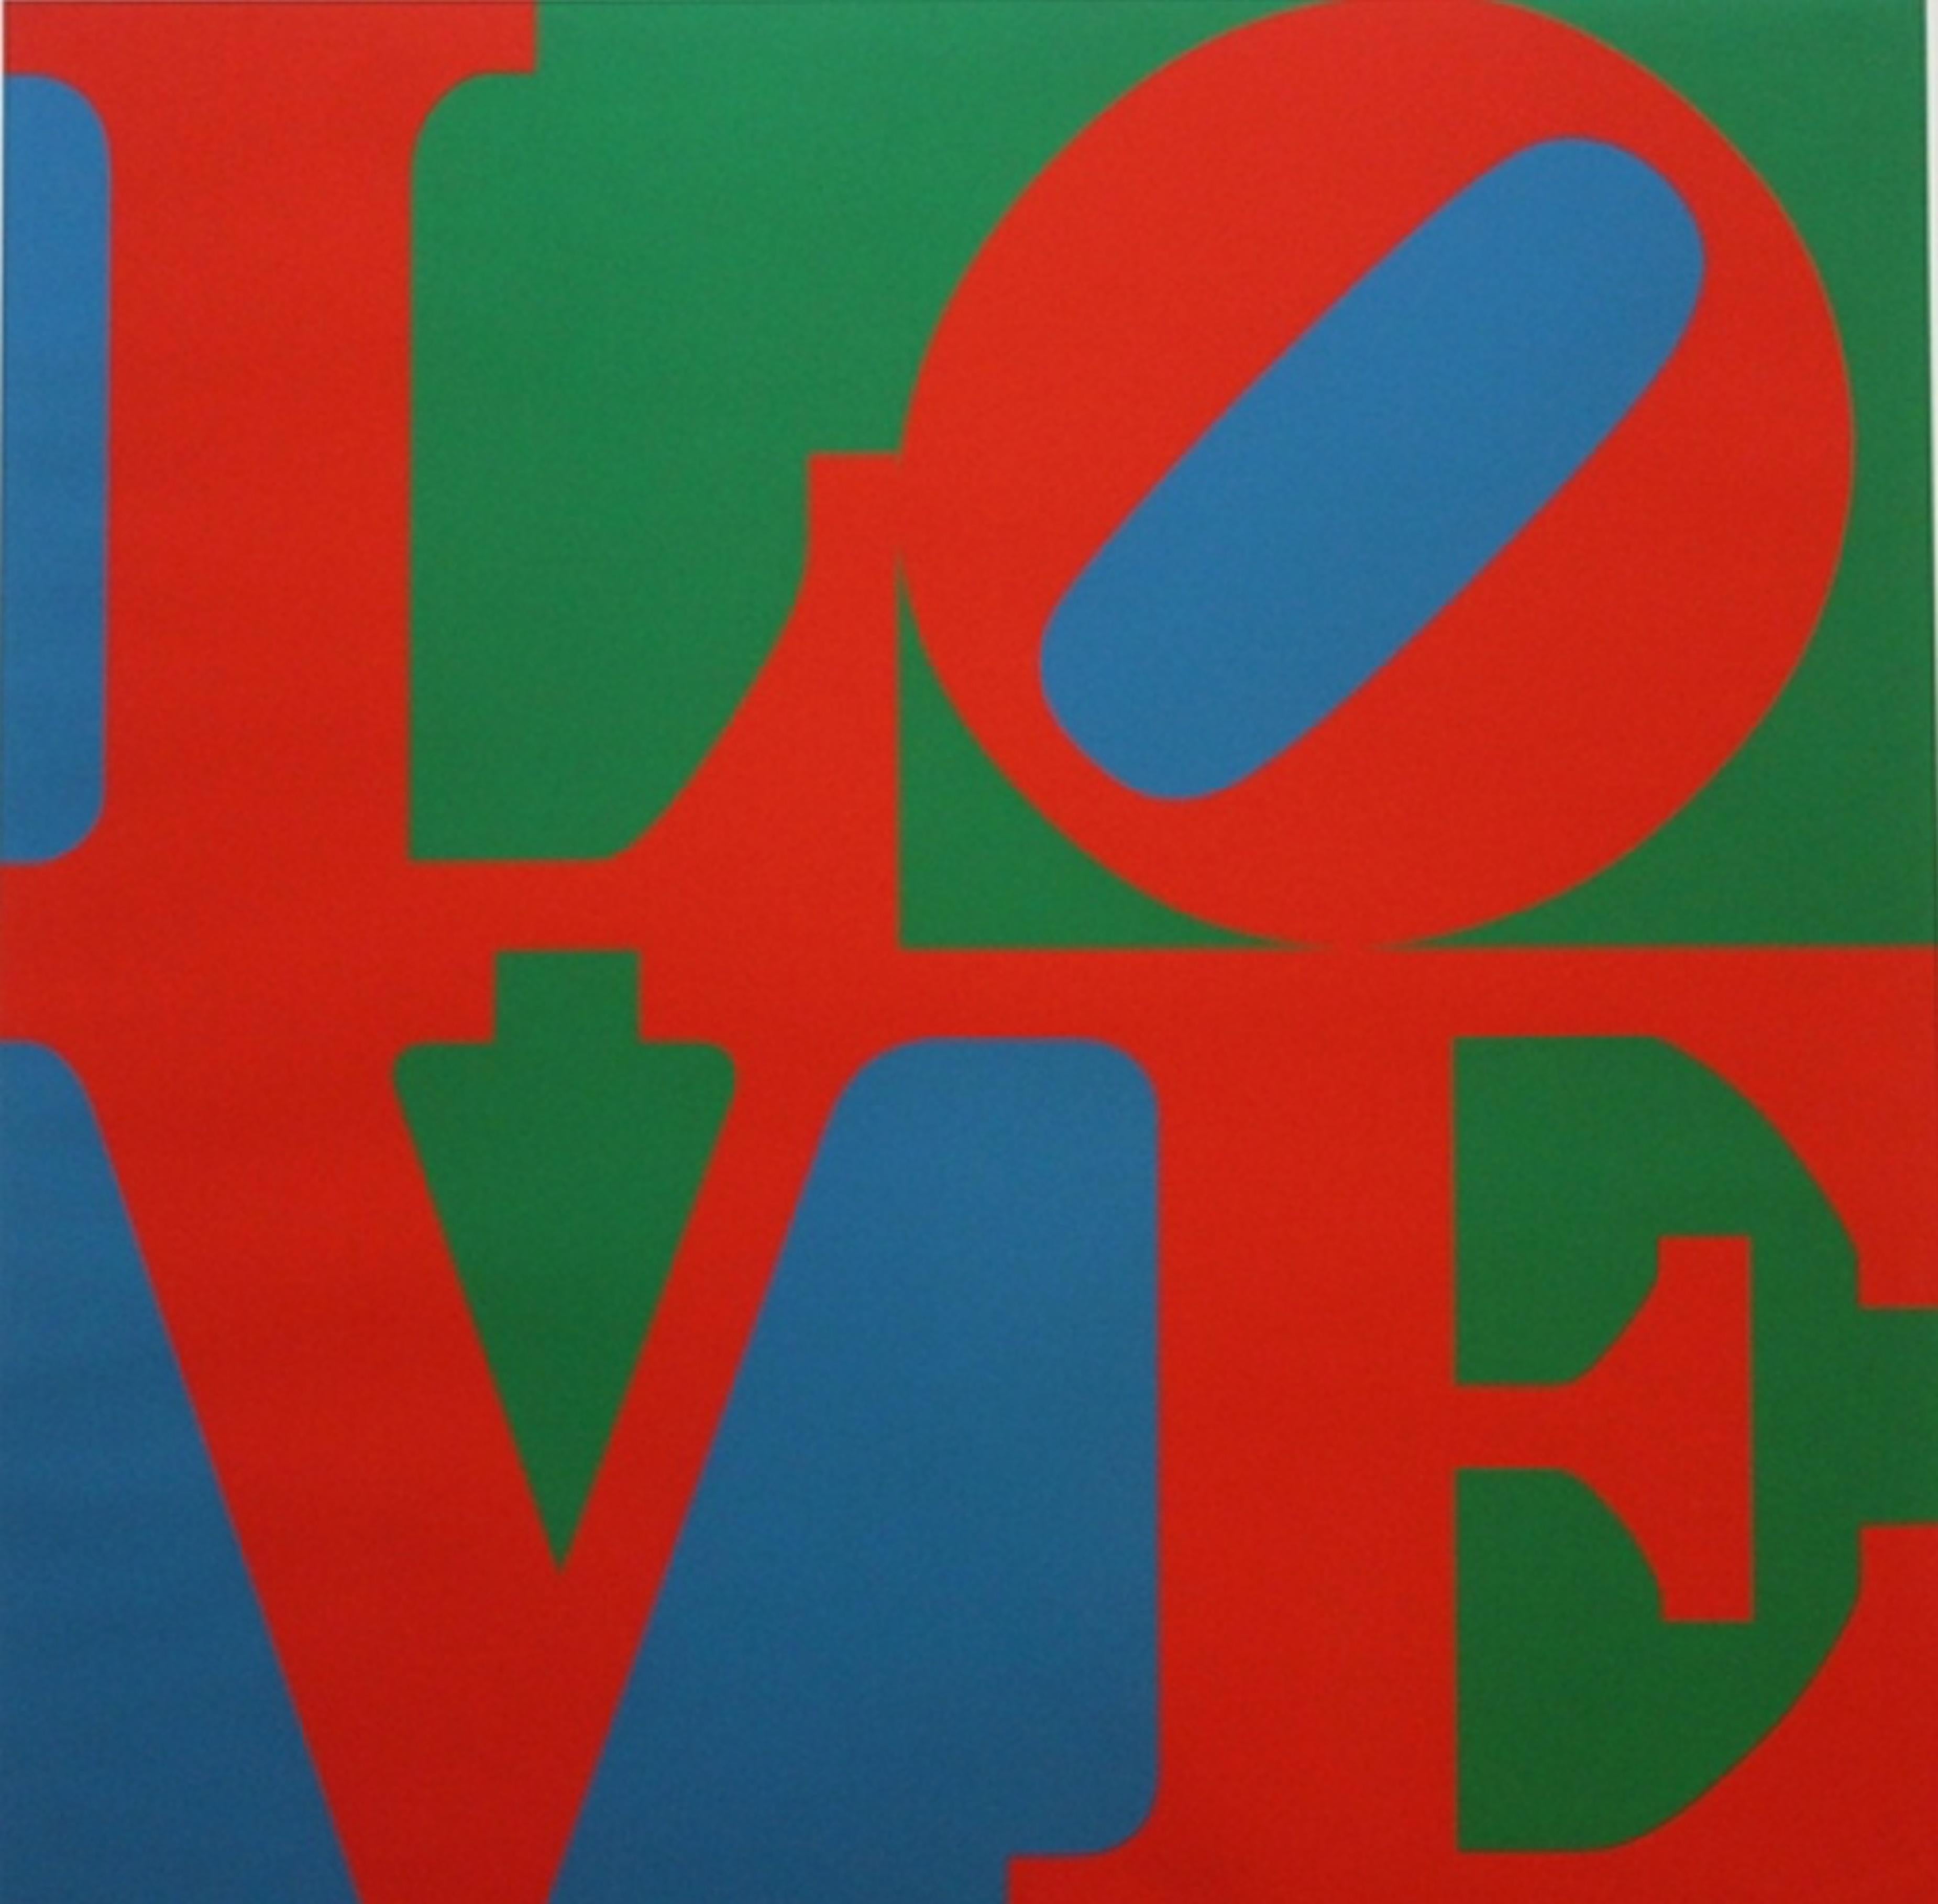 LOVE (the original), 39, Sheehan - Print by Robert Indiana